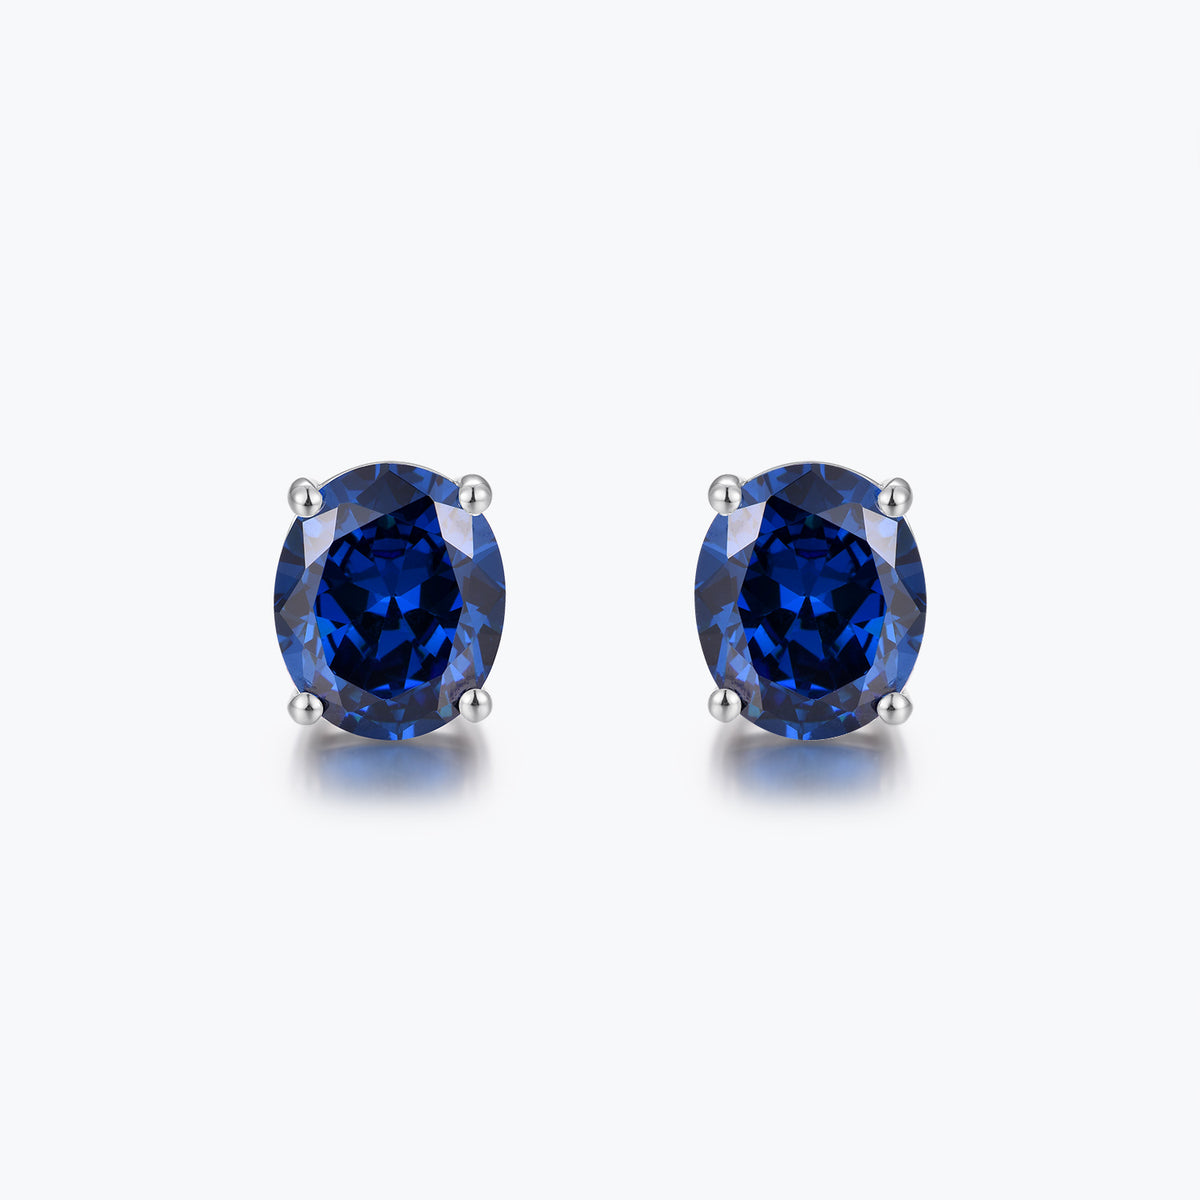 Dissoo® Sapphire Blue Galaxy Oval Sterling Silver Stud Earring